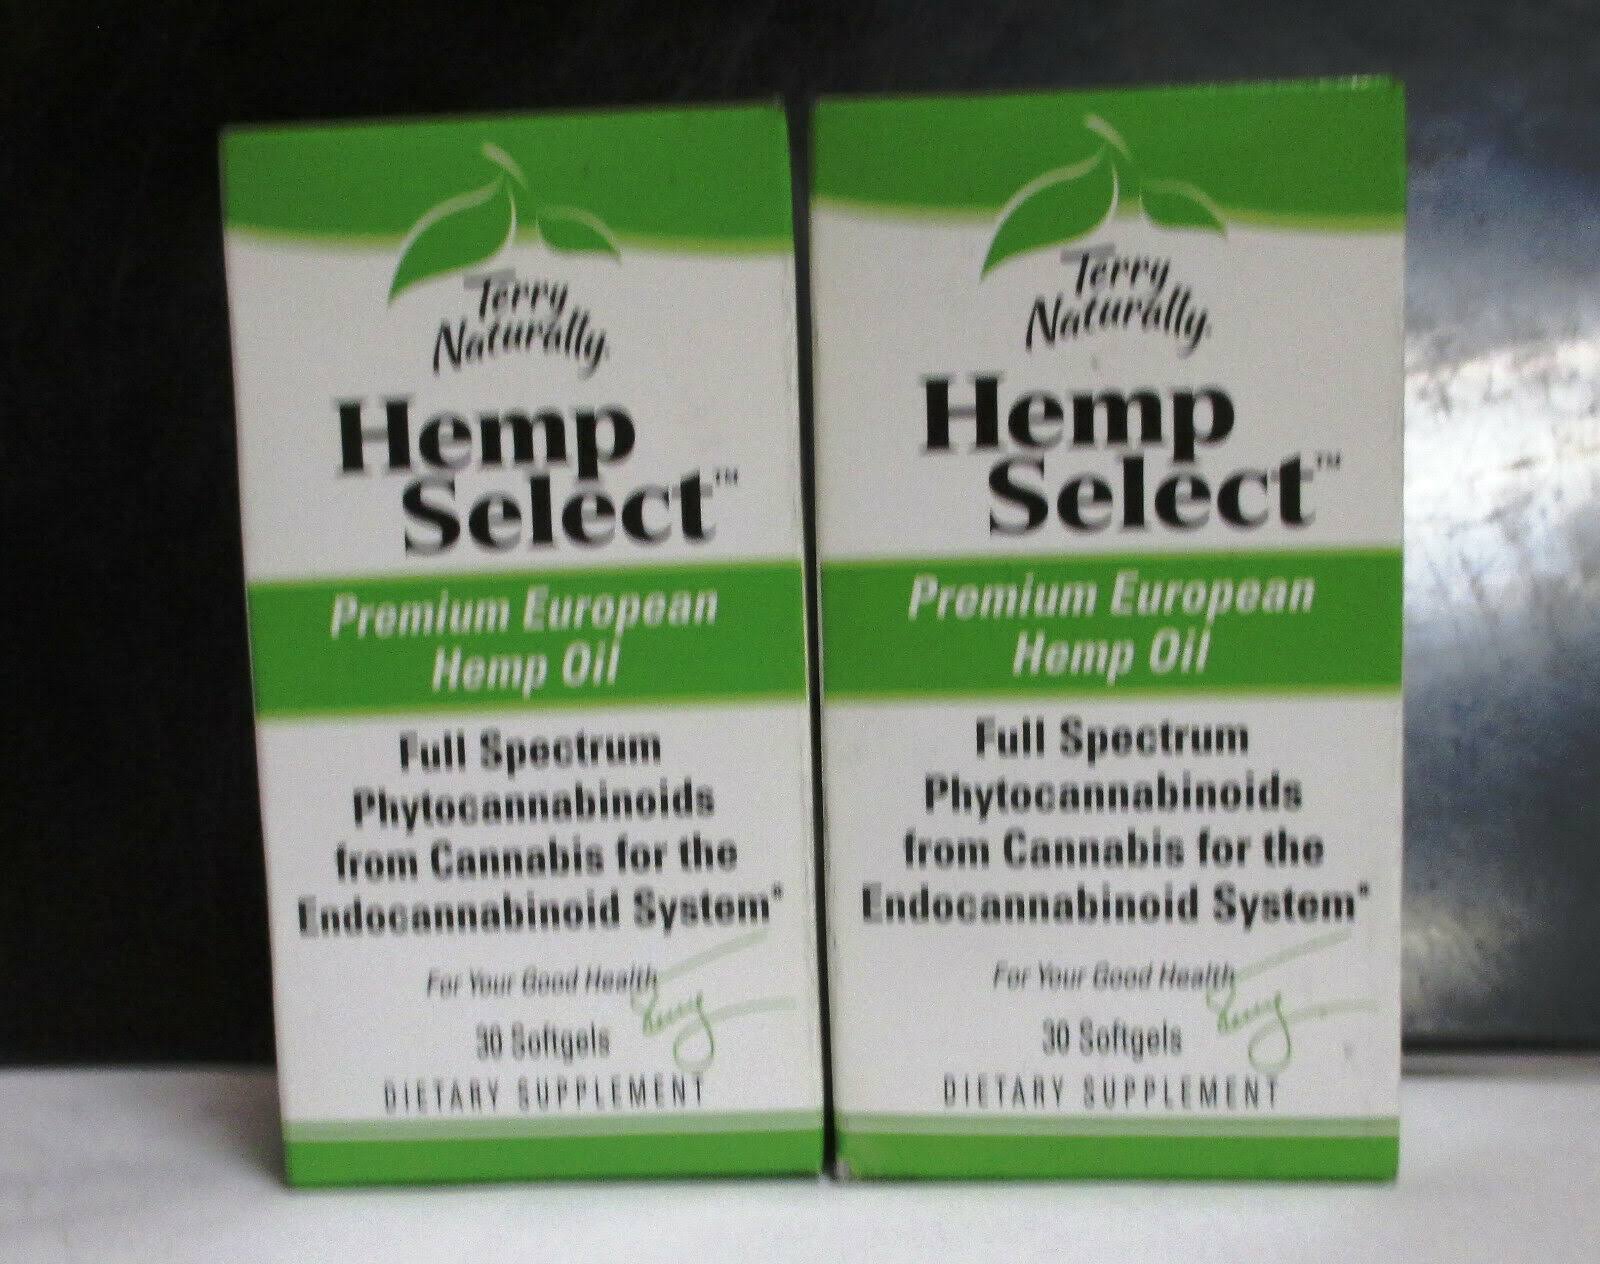 Europharma Terry Naturally Hemp Oil Supplement - 30 Softgels